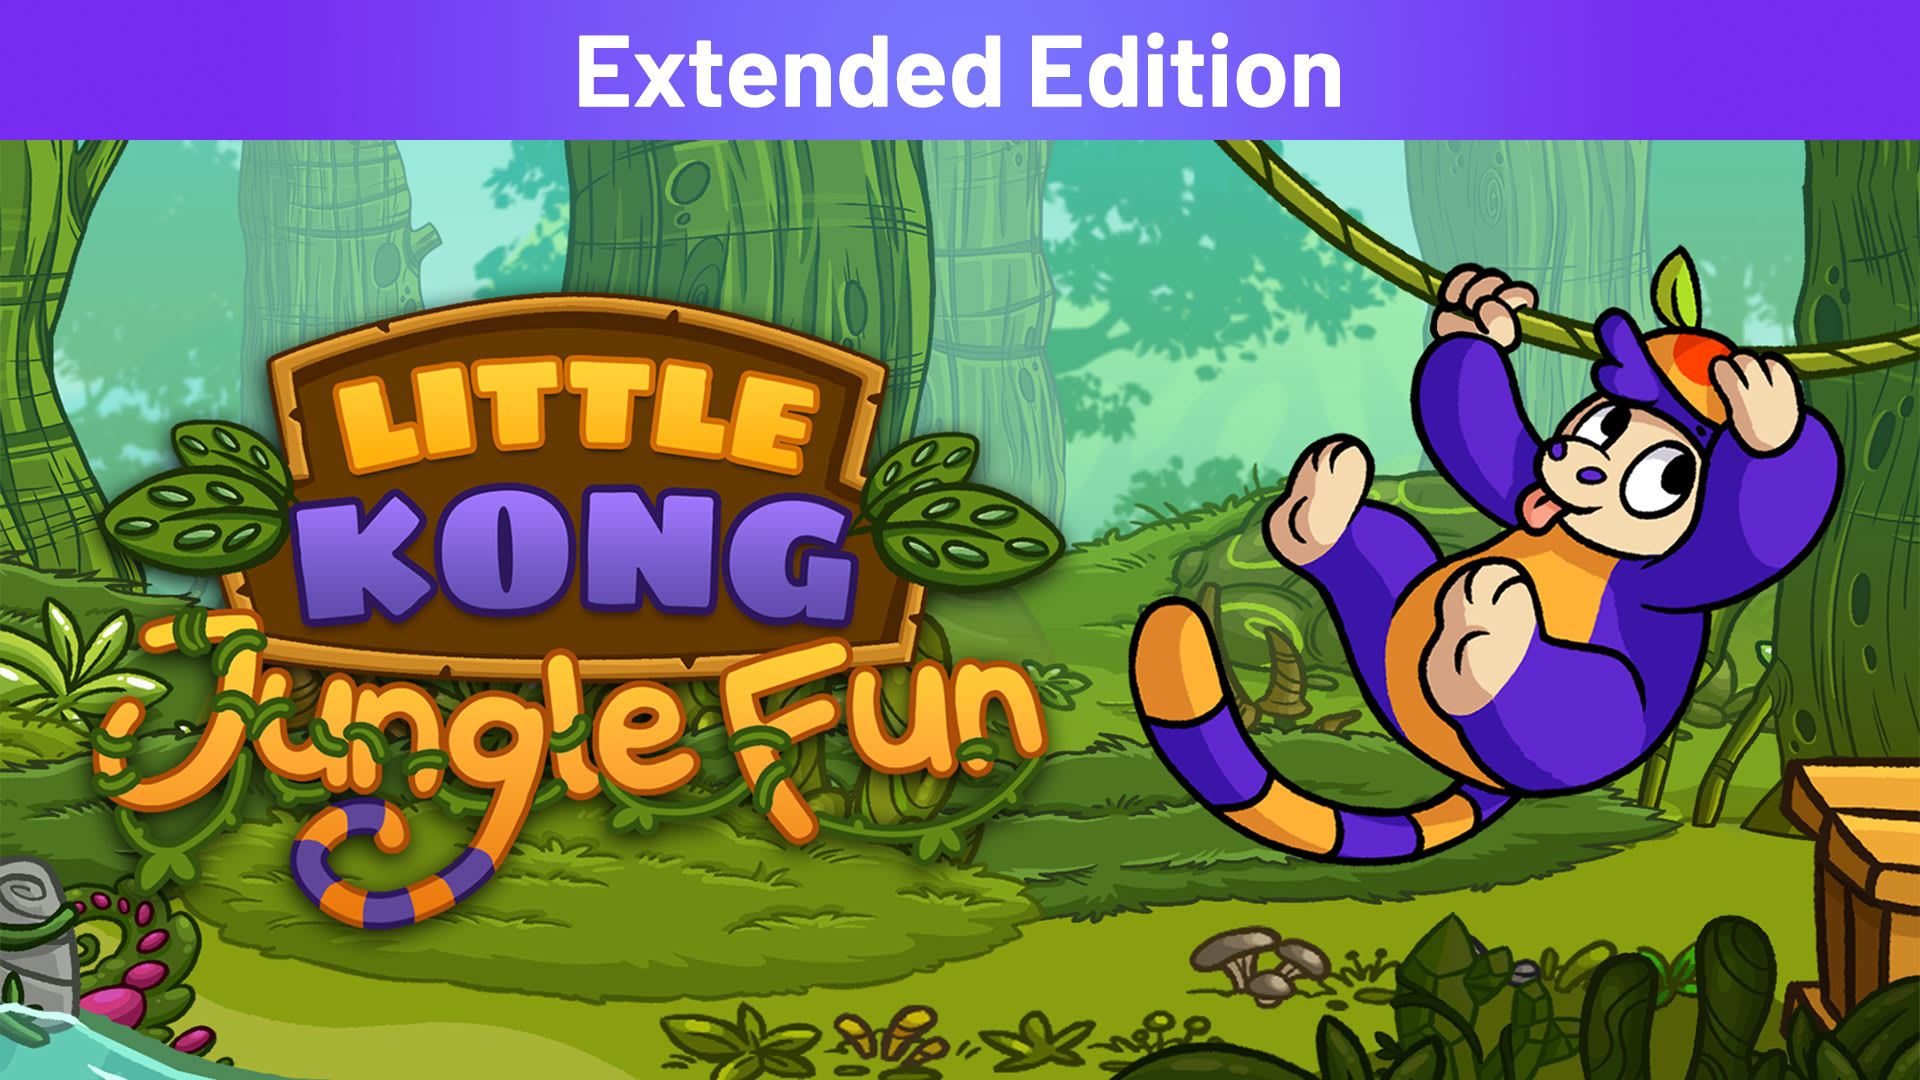 Little Kong Jungle Fun Extended Edition